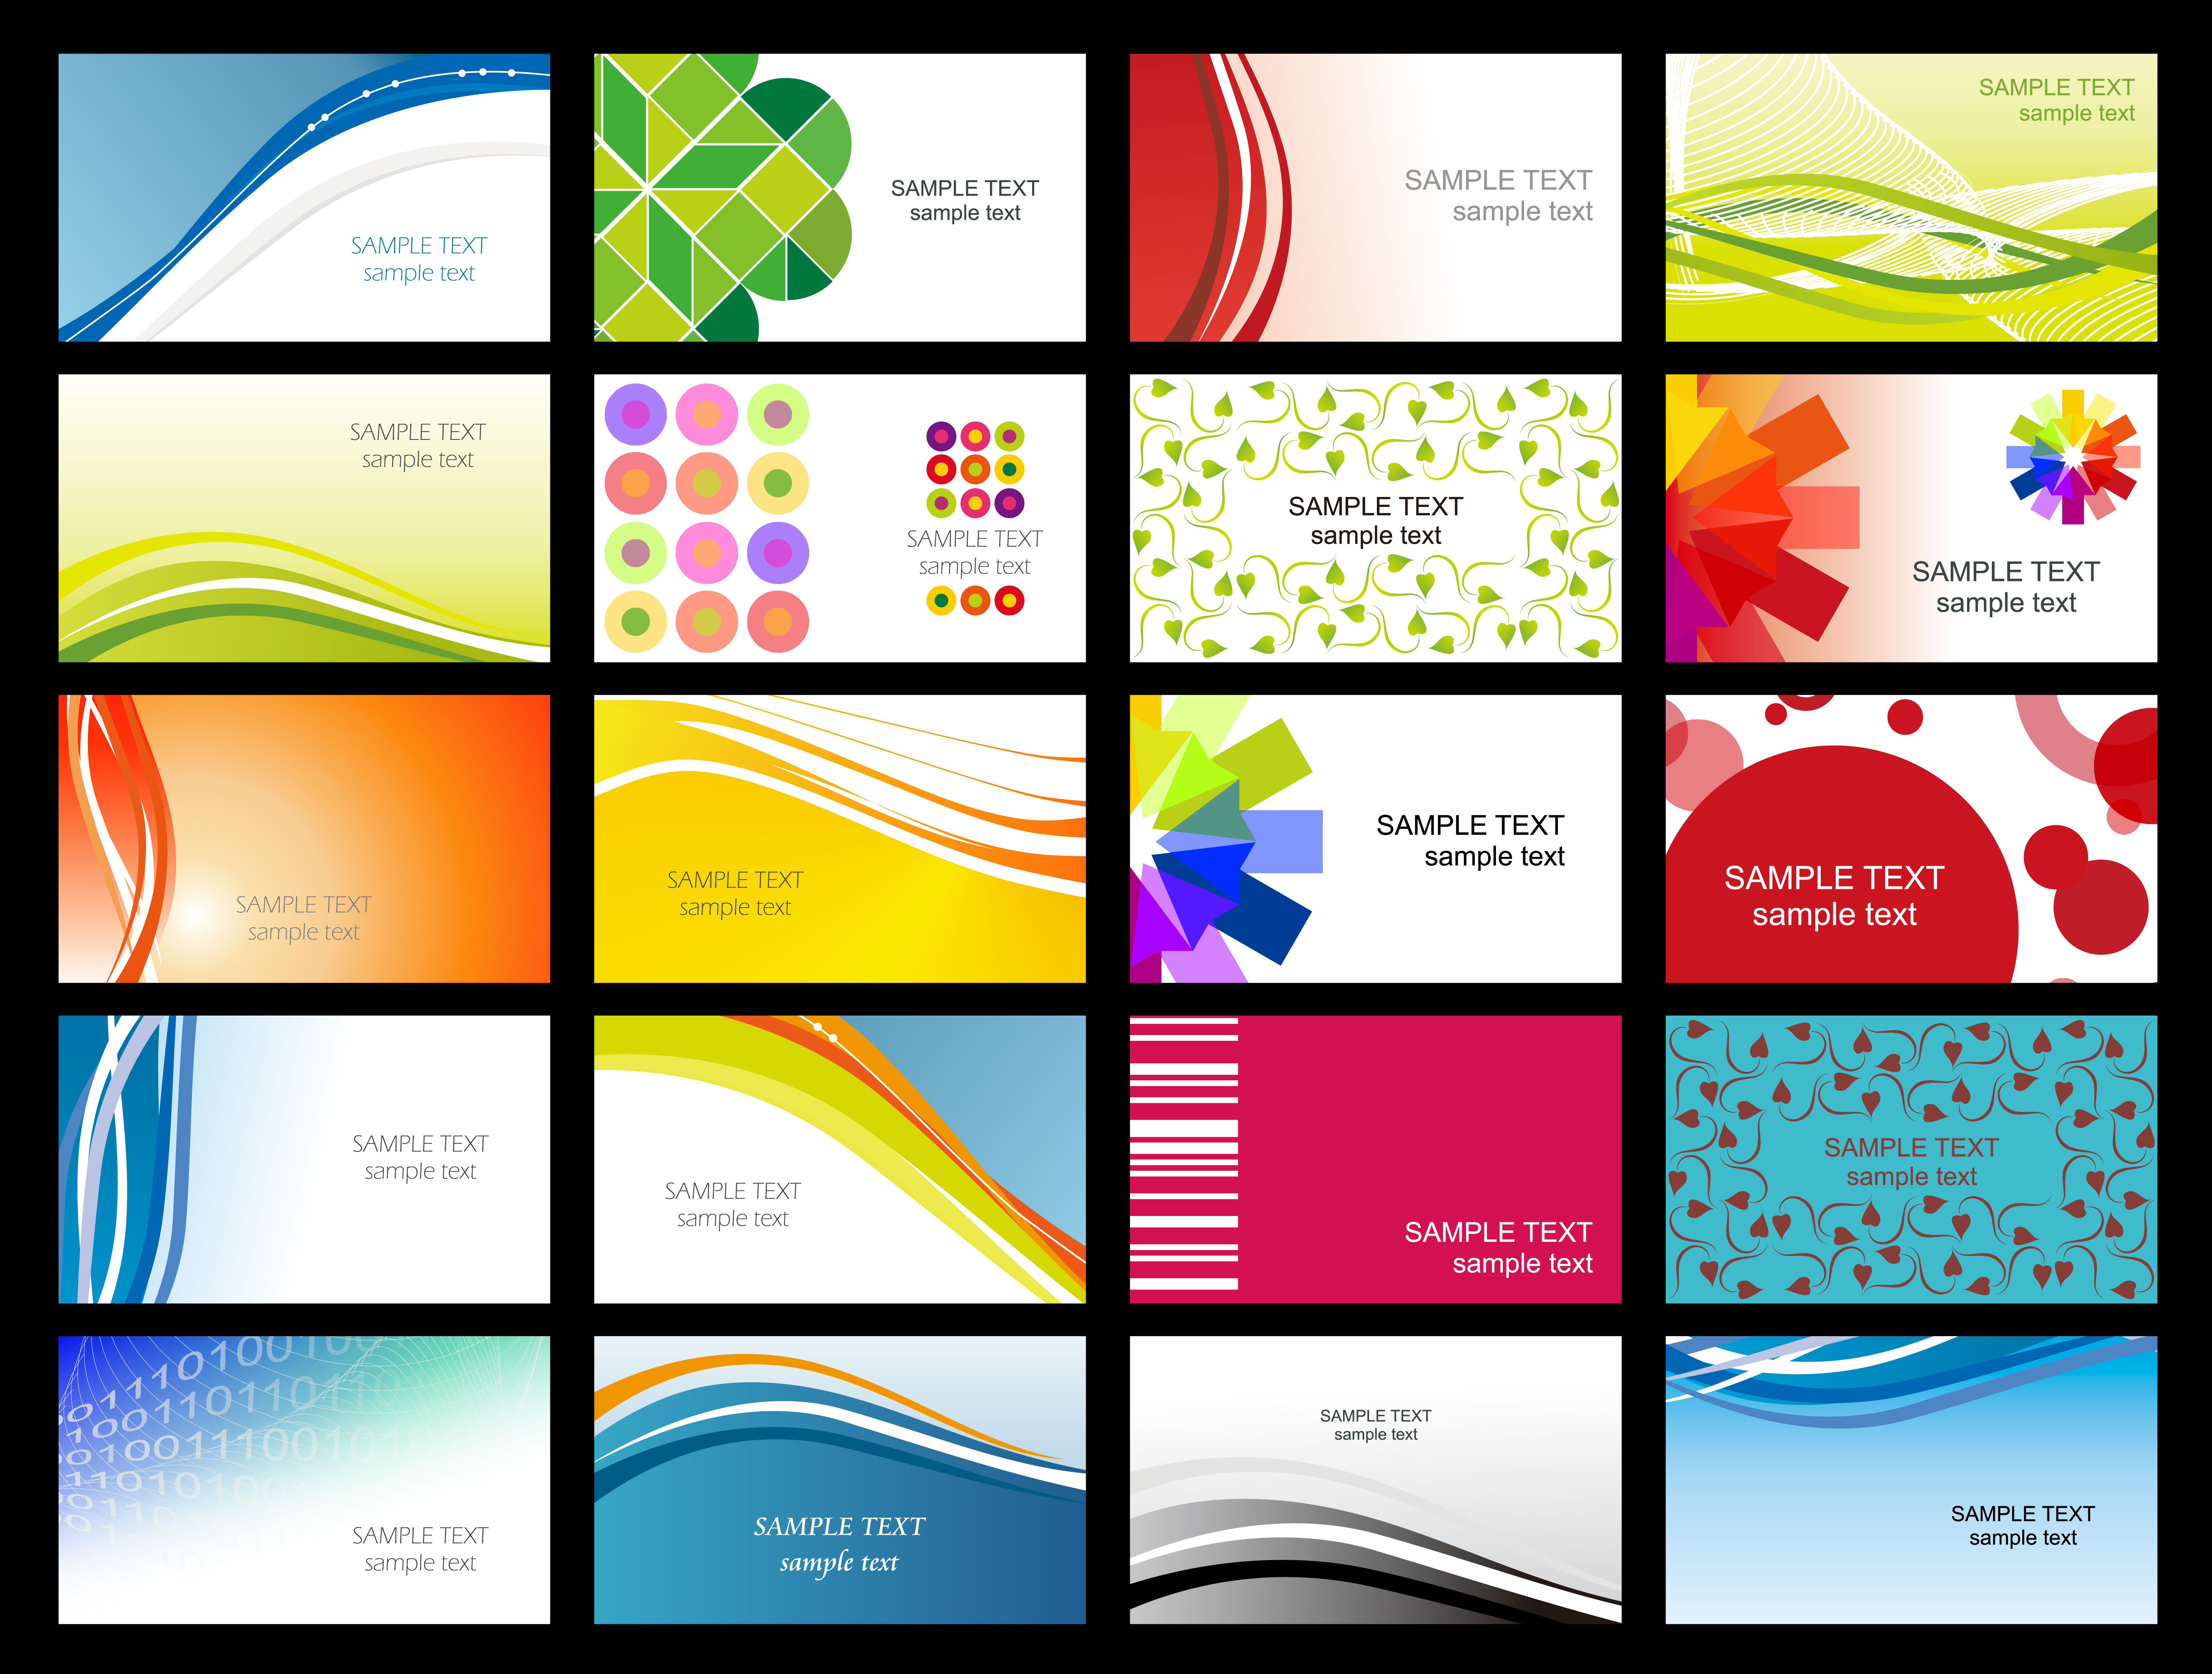 Free Printable Business Card Templates Sample | Get Sniffer - Free Printable Business Cards